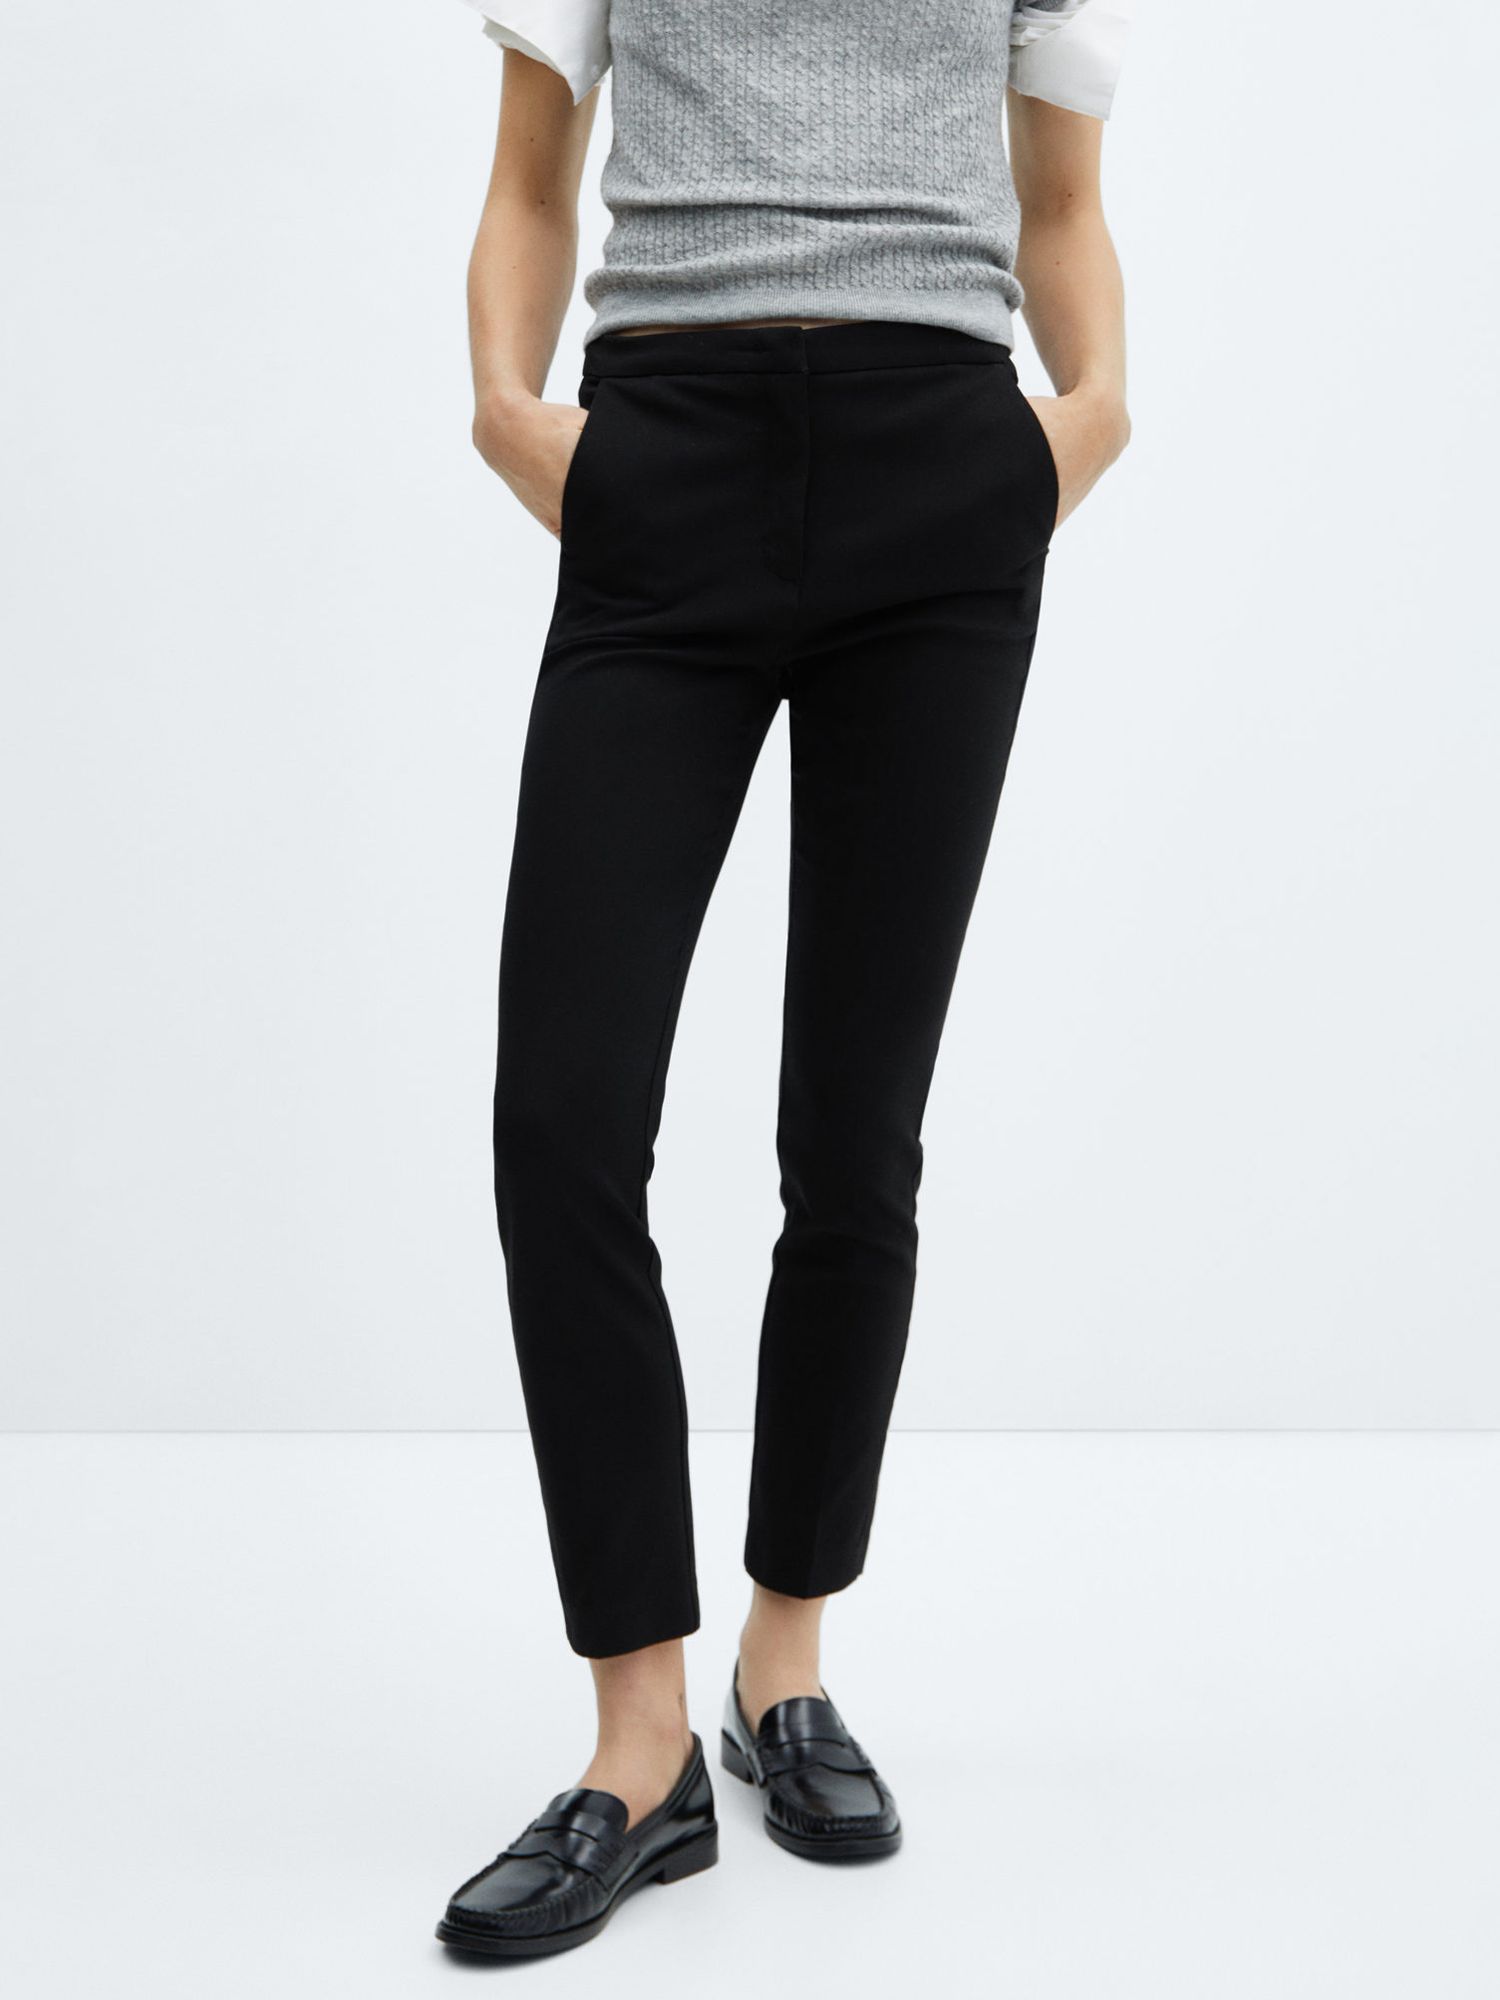 A New Day Women's Geometric Print Slim Ankle Pants (Black/Cream